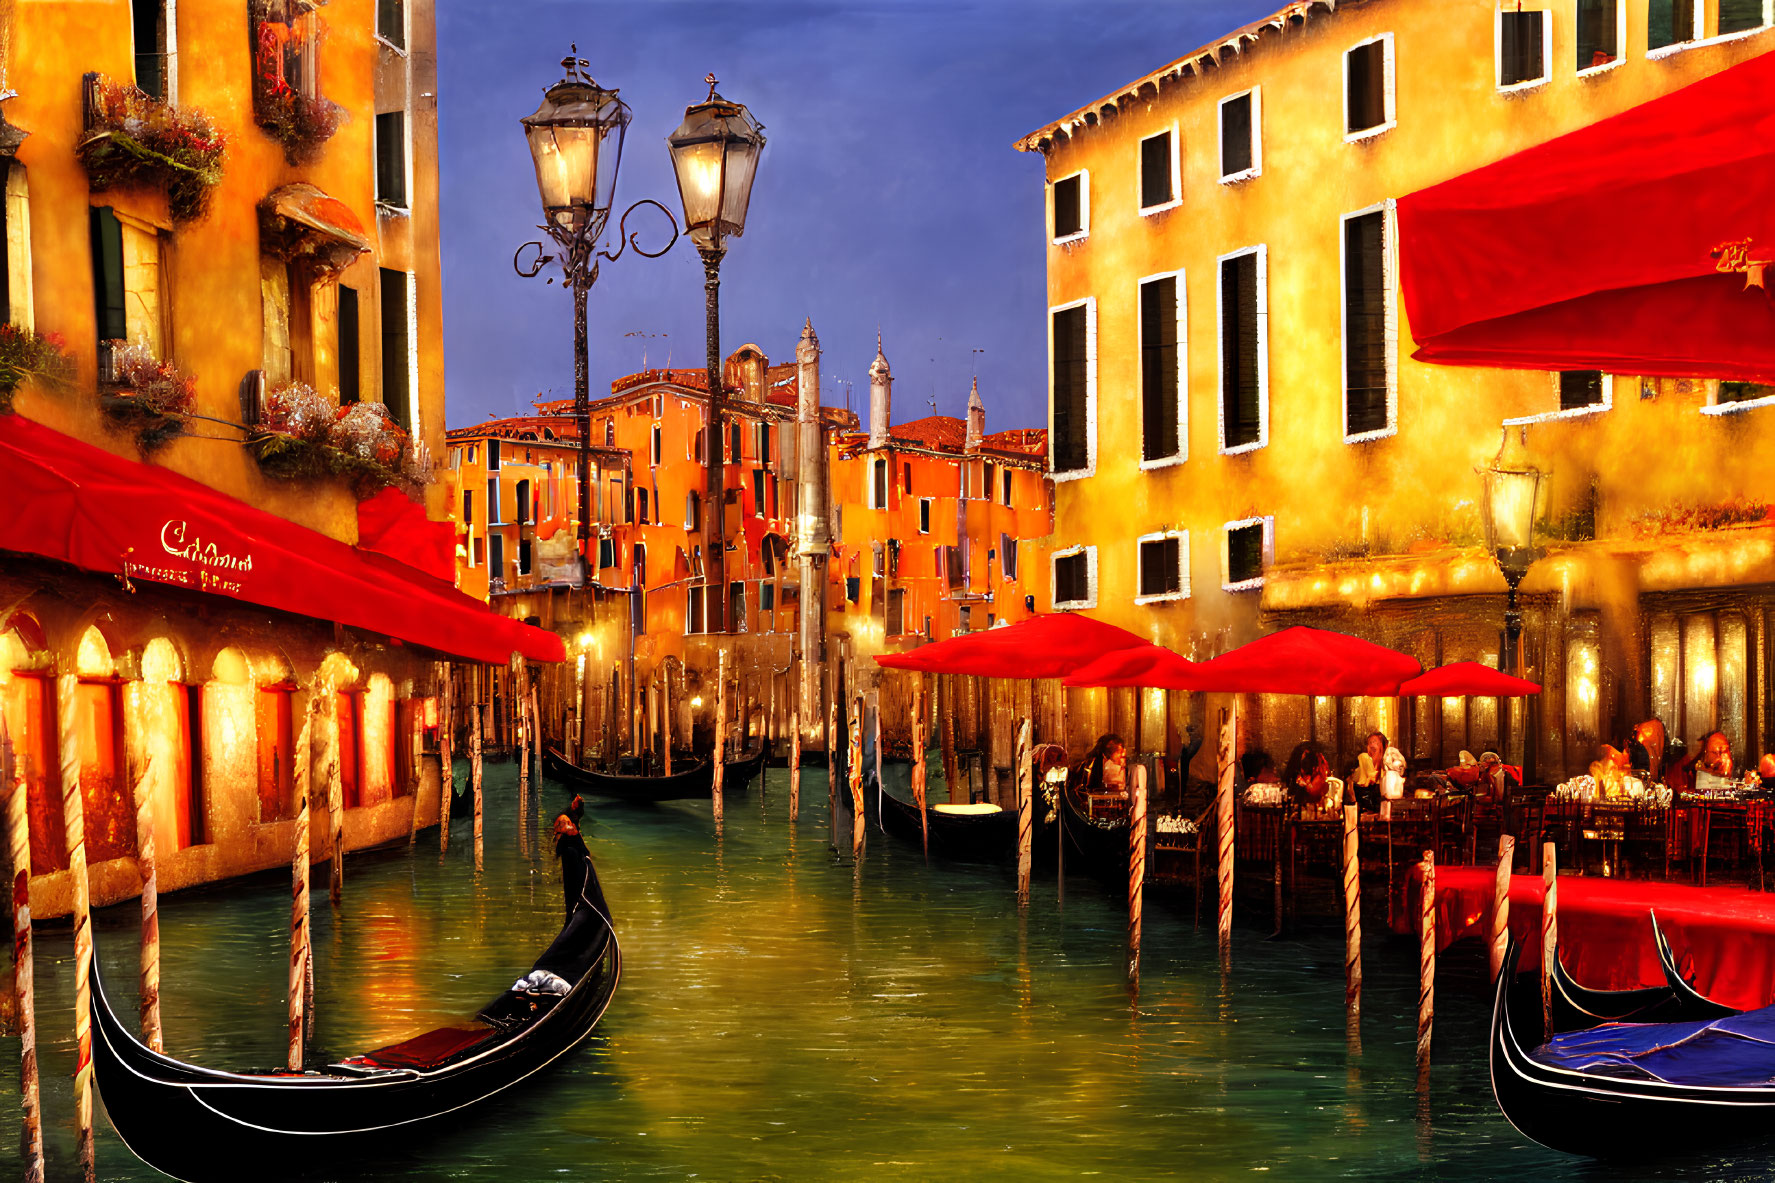 Vibrant Venice evening: gondolas, outdoor dining, illuminated buildings